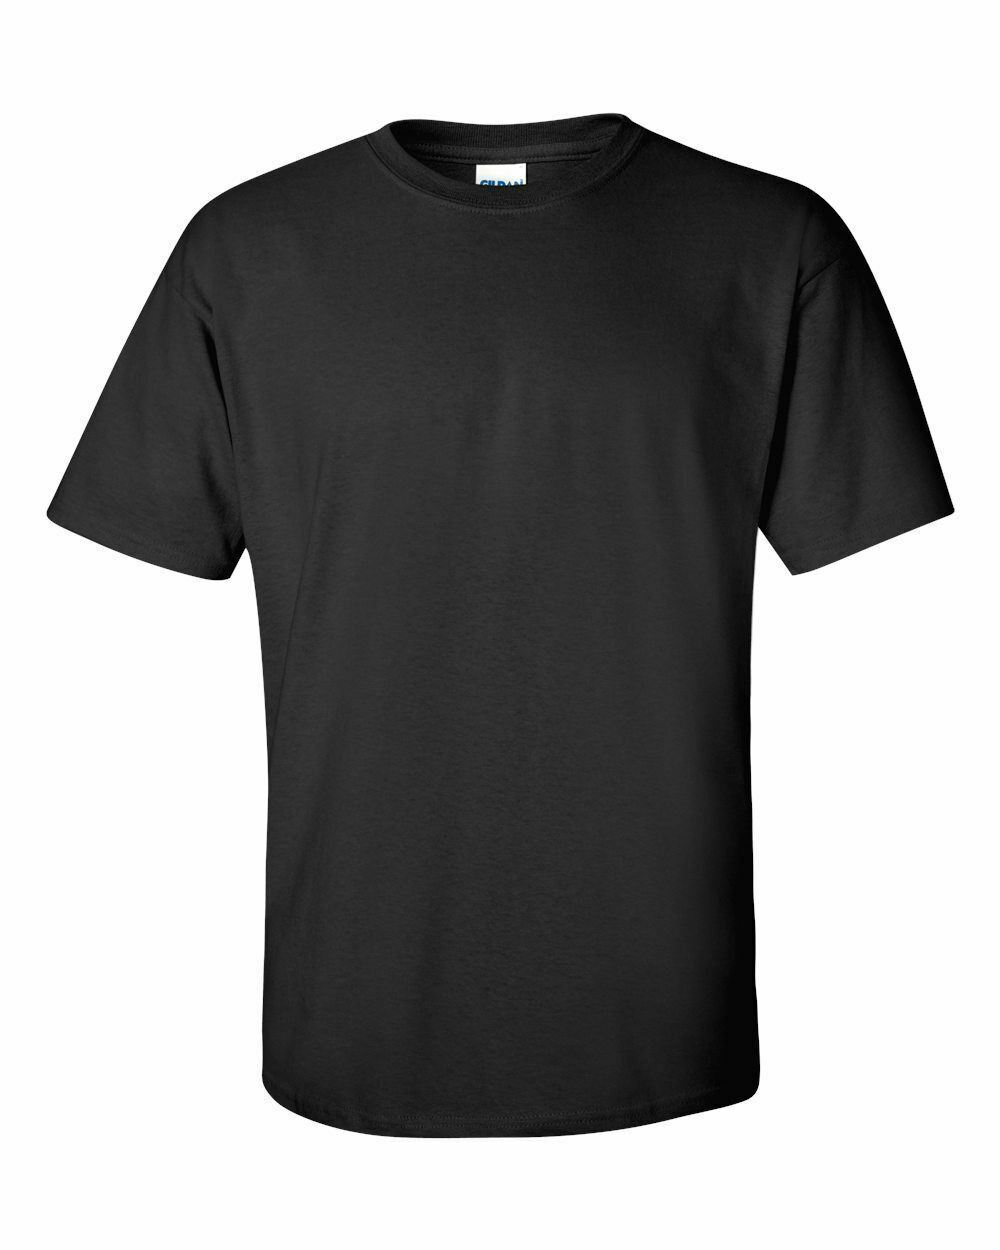 Personalized Custom T-Shirt Customized w/Photo, Text, Logo DTG on Gildan Shirts*